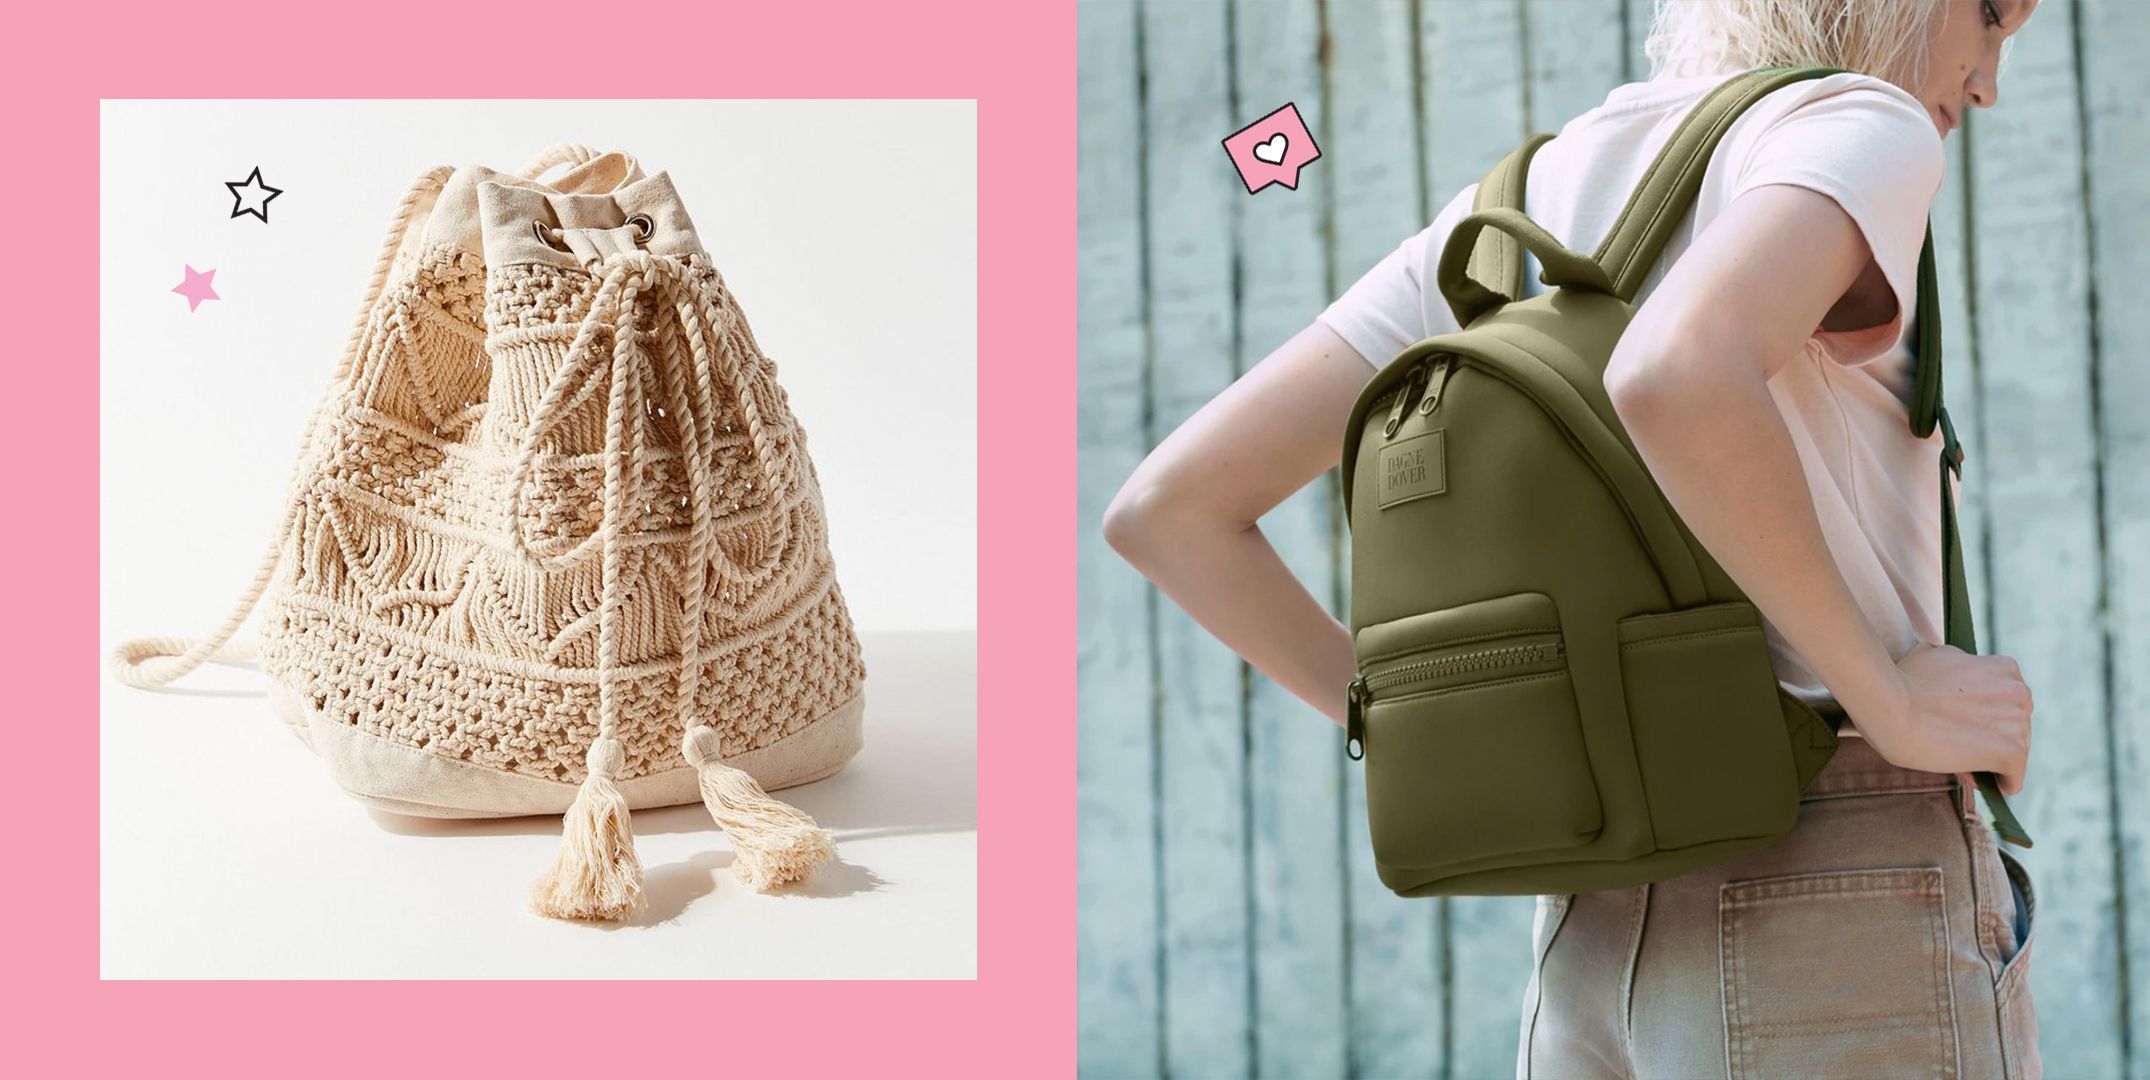 best fashion backpack brands